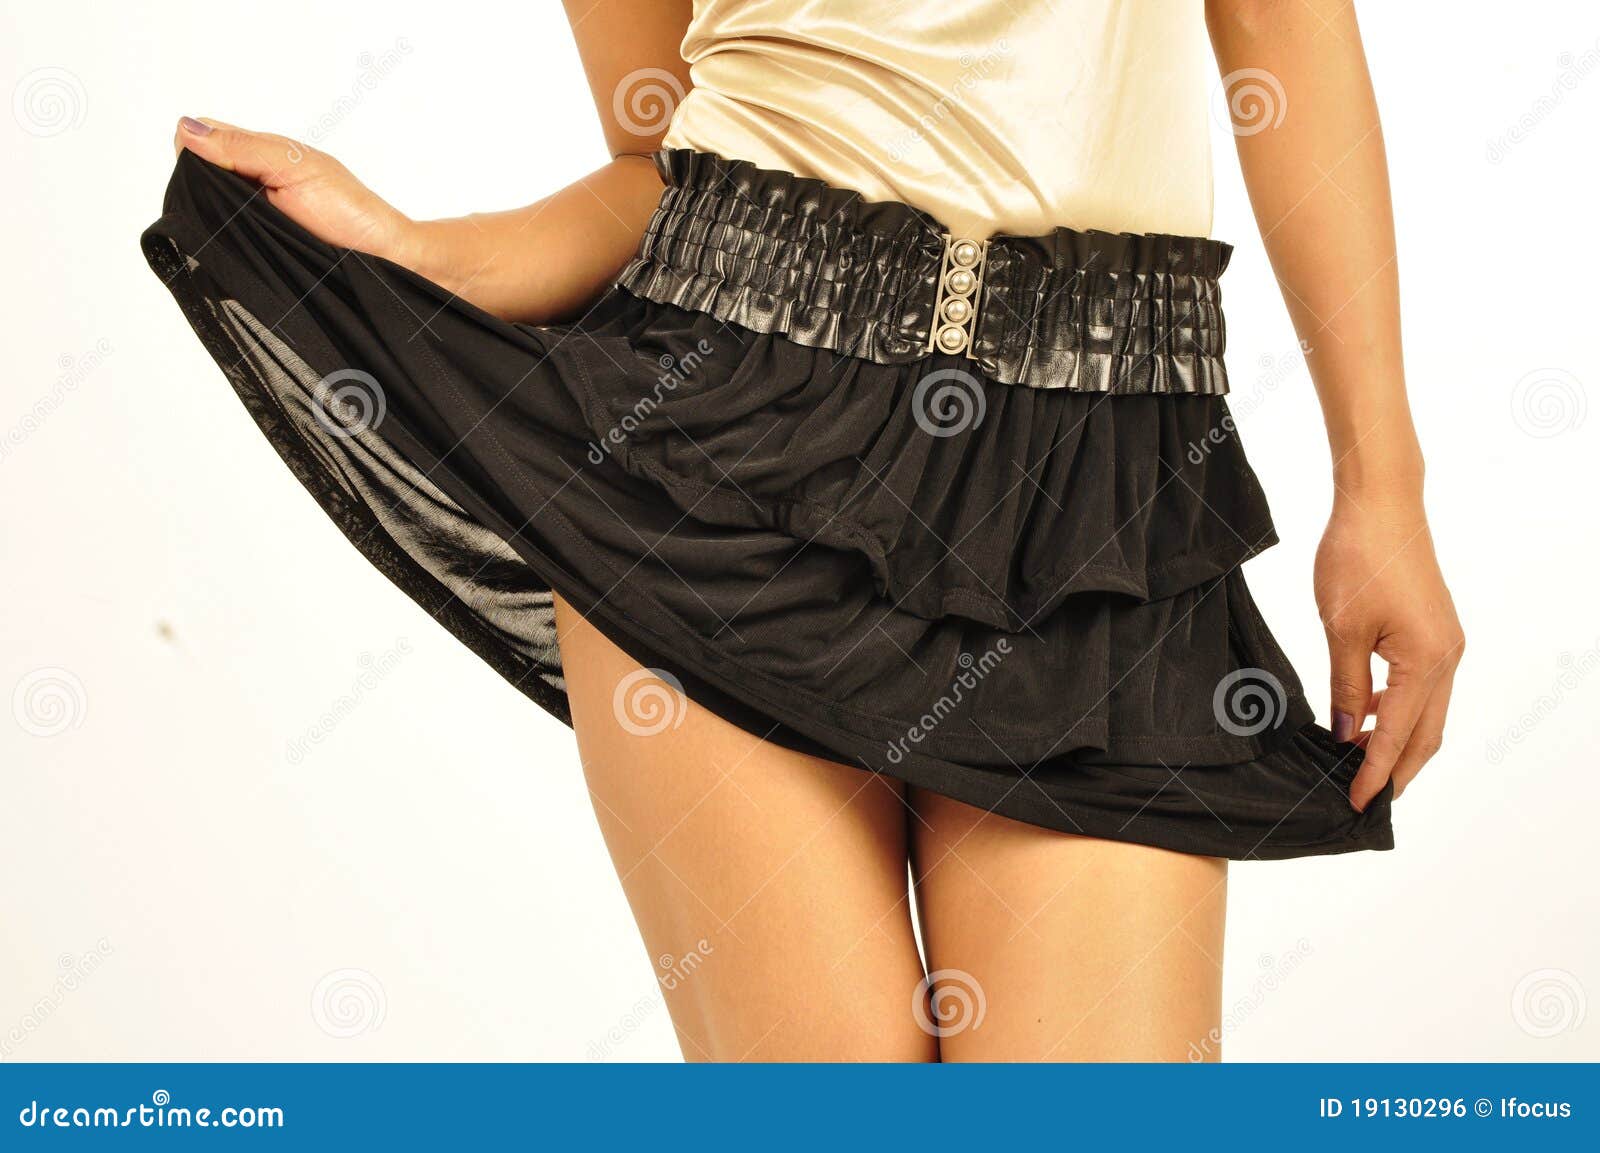 akane sakai share girl lifts up skirt photos